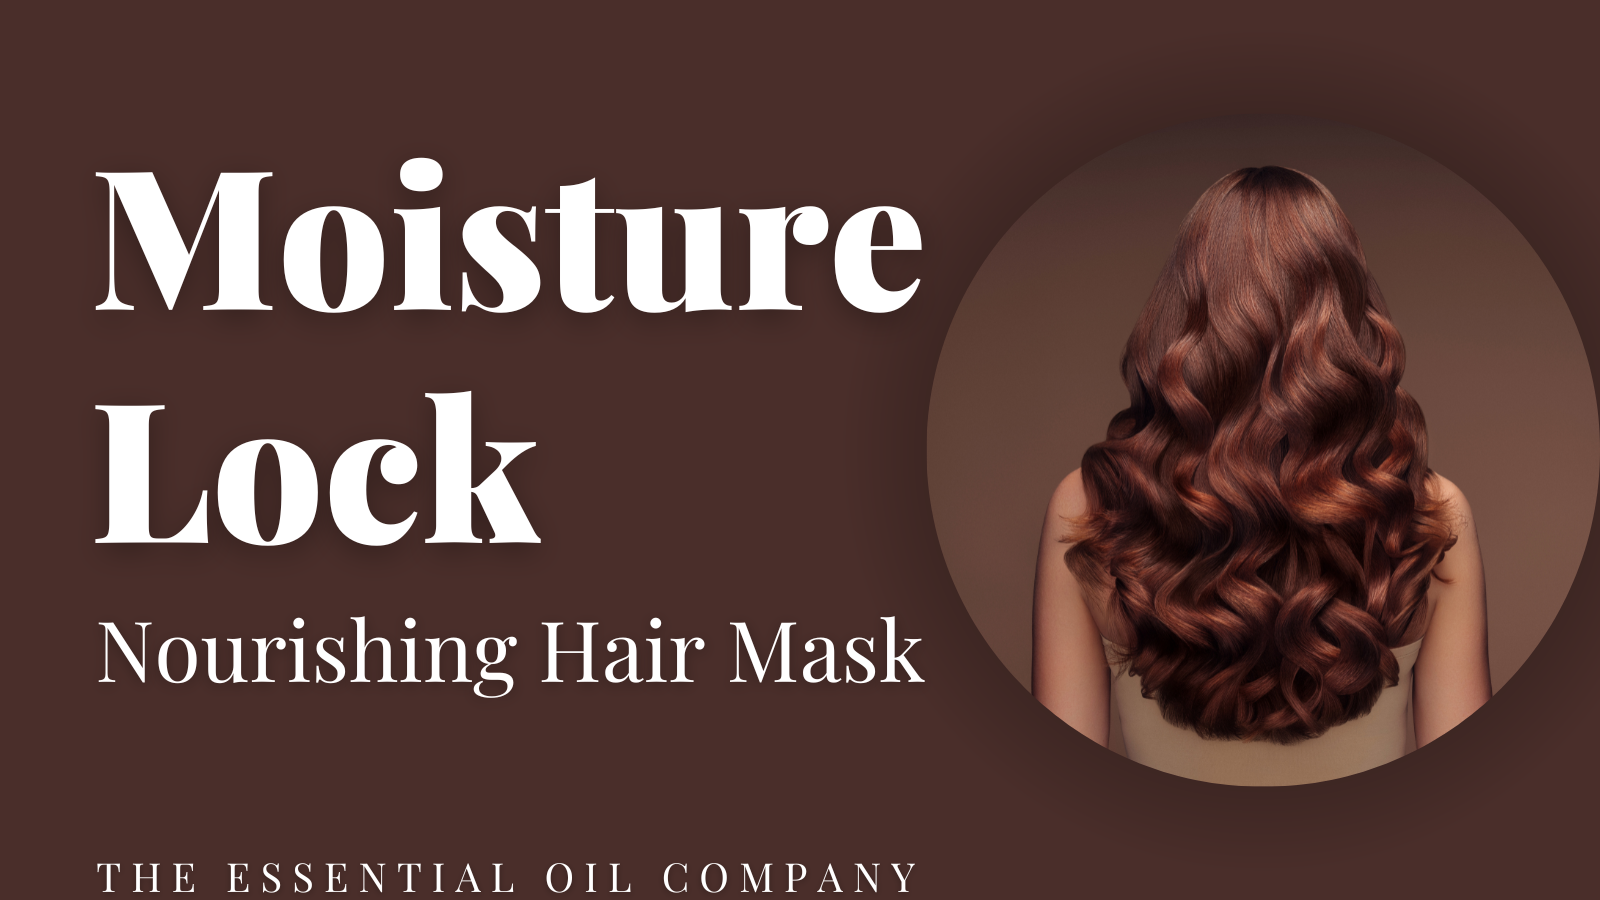 Moisture Lock Nourishing Hair Mask